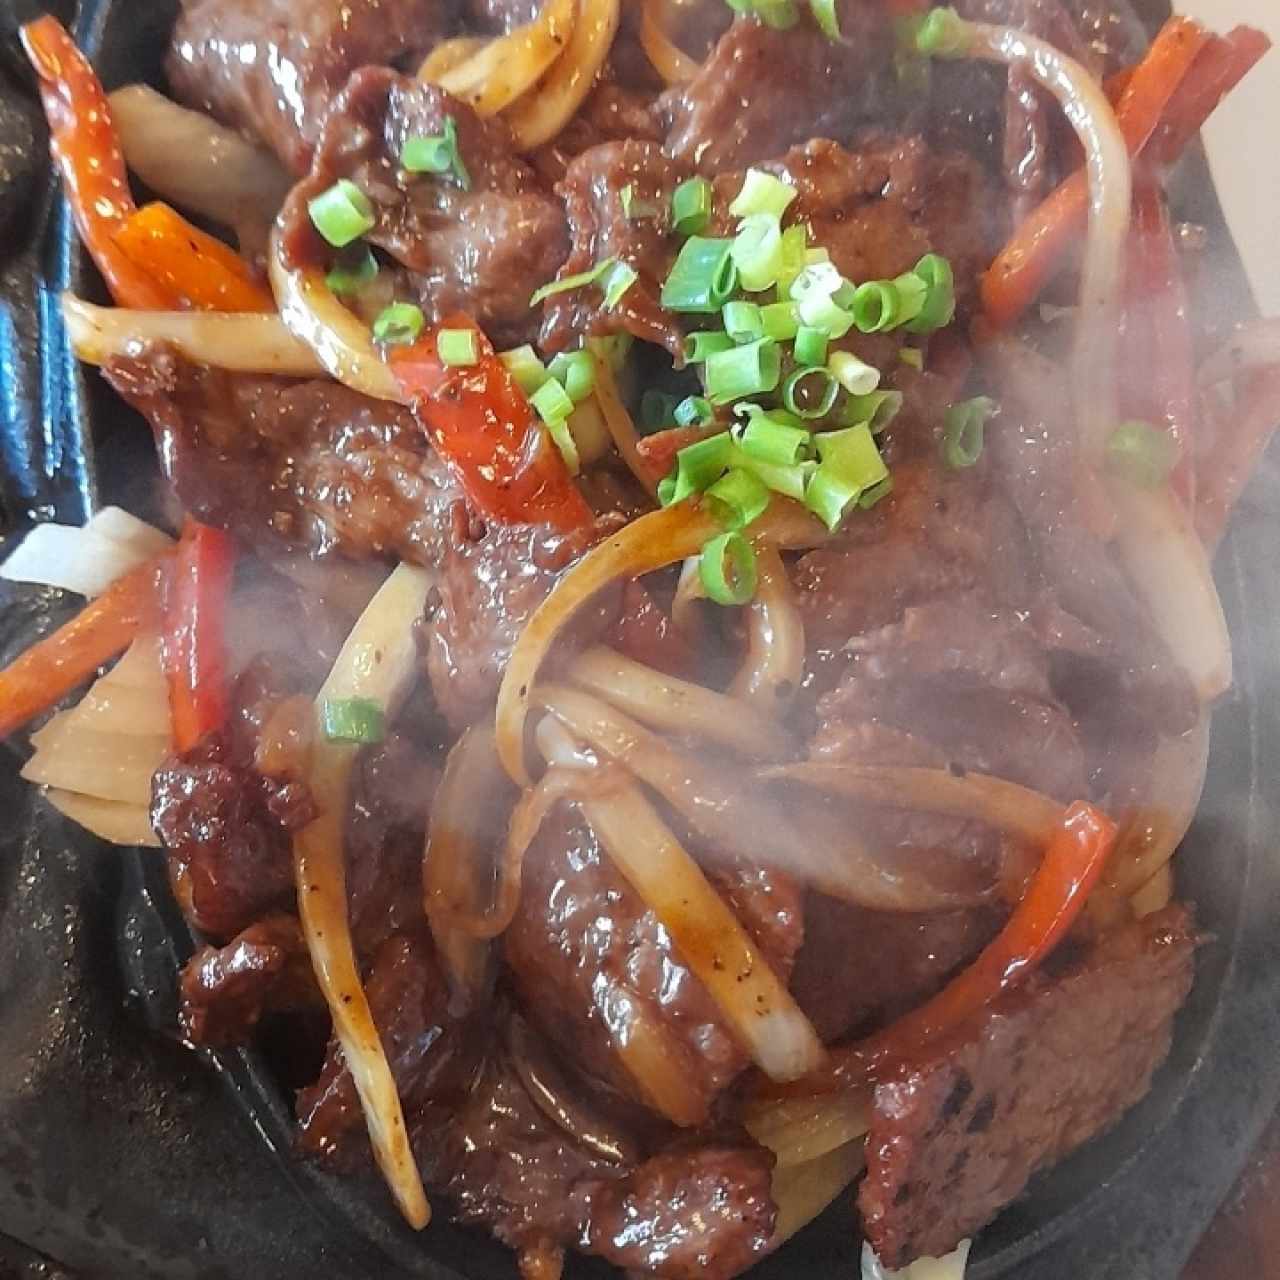 Carnes - Carne Mongoliana